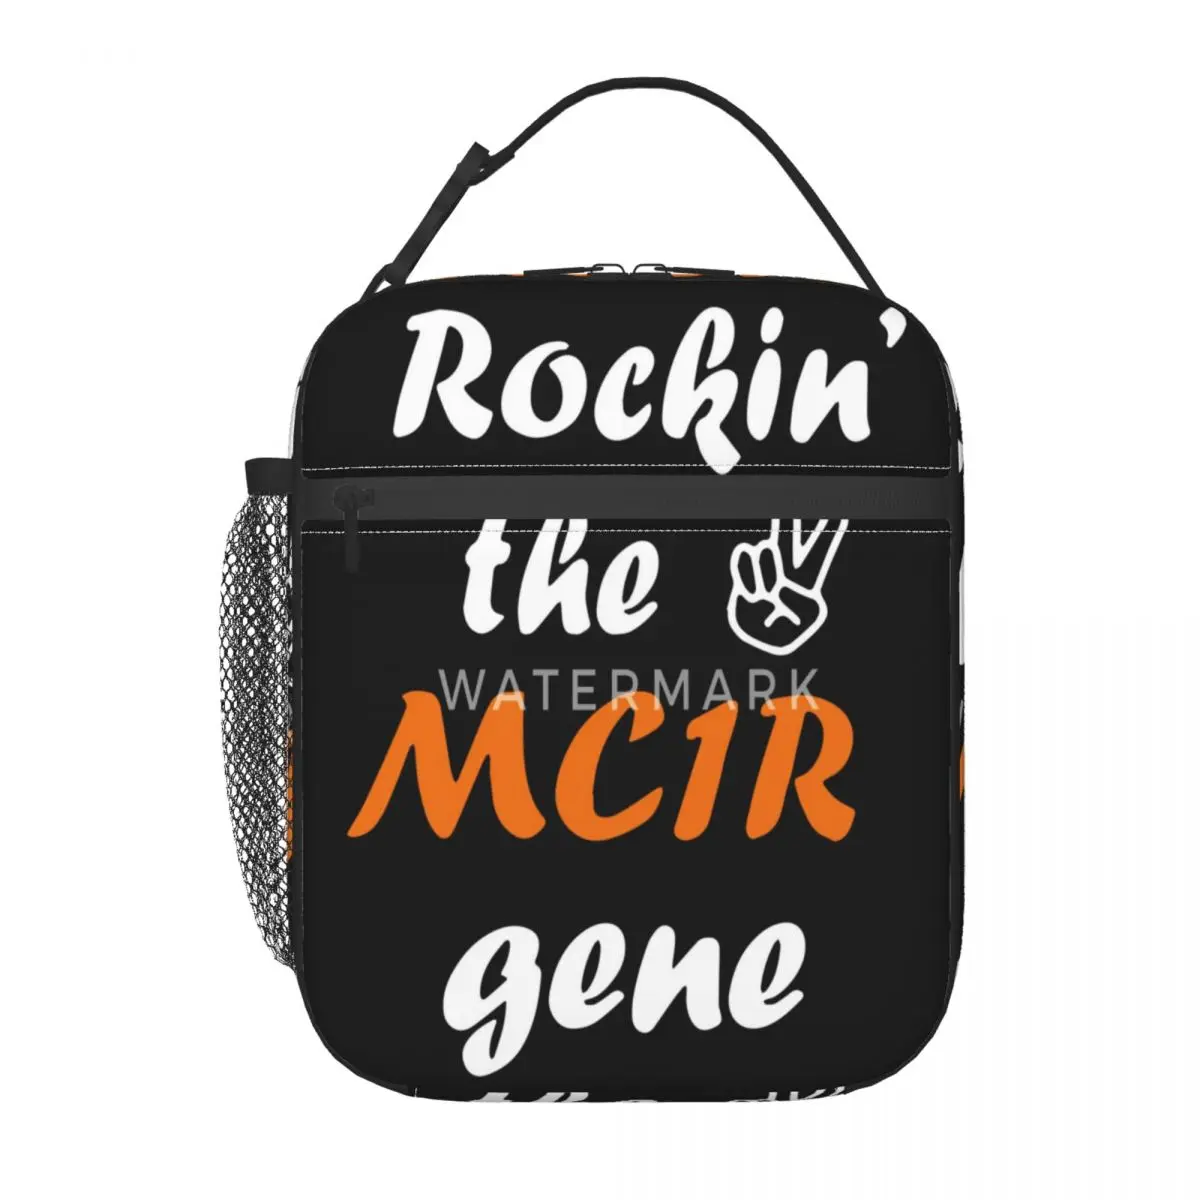 

Rockin' The Mc1r Gene Insulated Lunch Bag Holiday With Zipper Mesh Bag Travel Insulated Lunch Bag Customizable